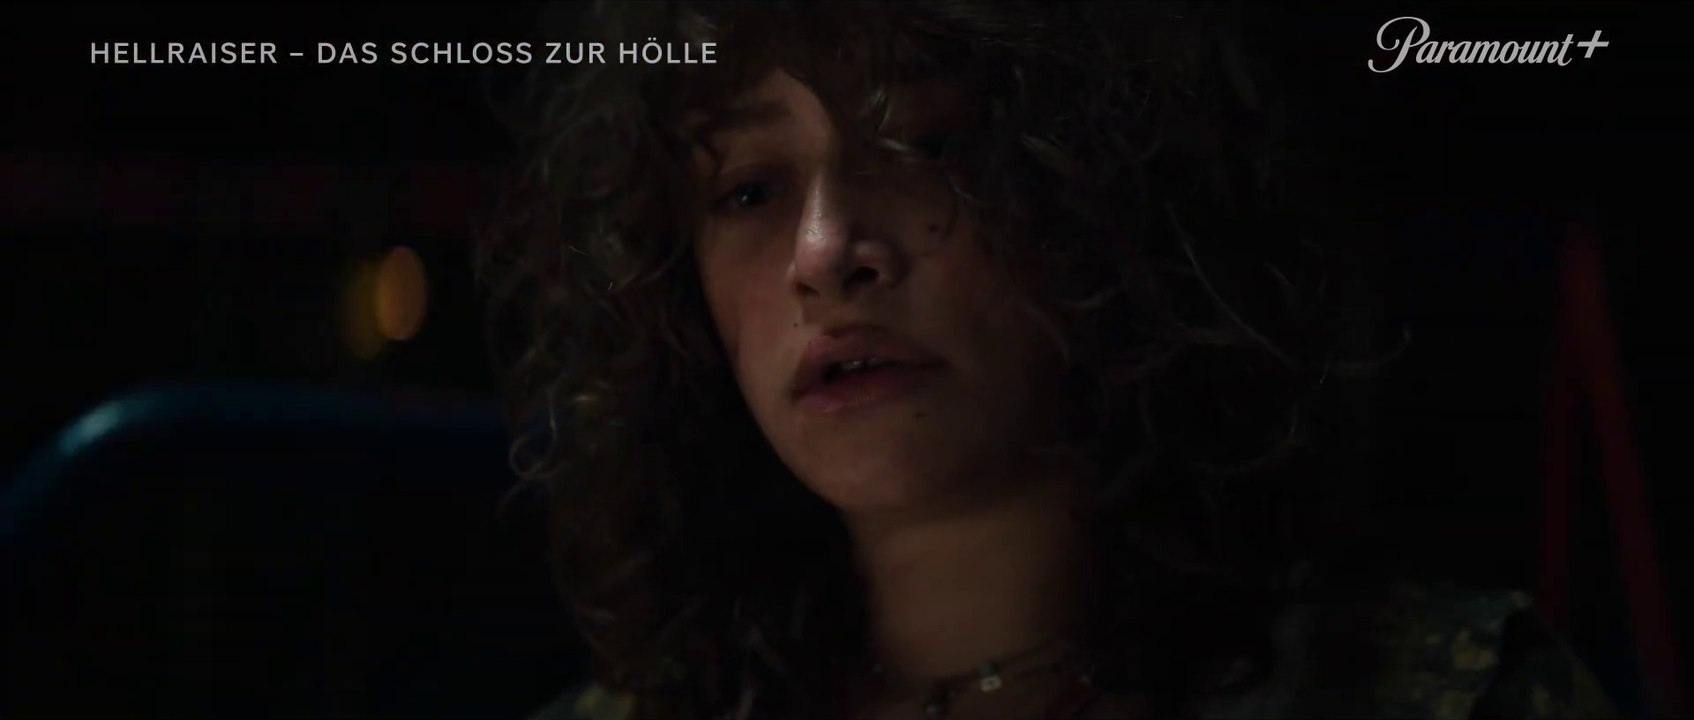 Hellraiser: Das Schloss zur Hölle - Trailer (Deutsch) HD